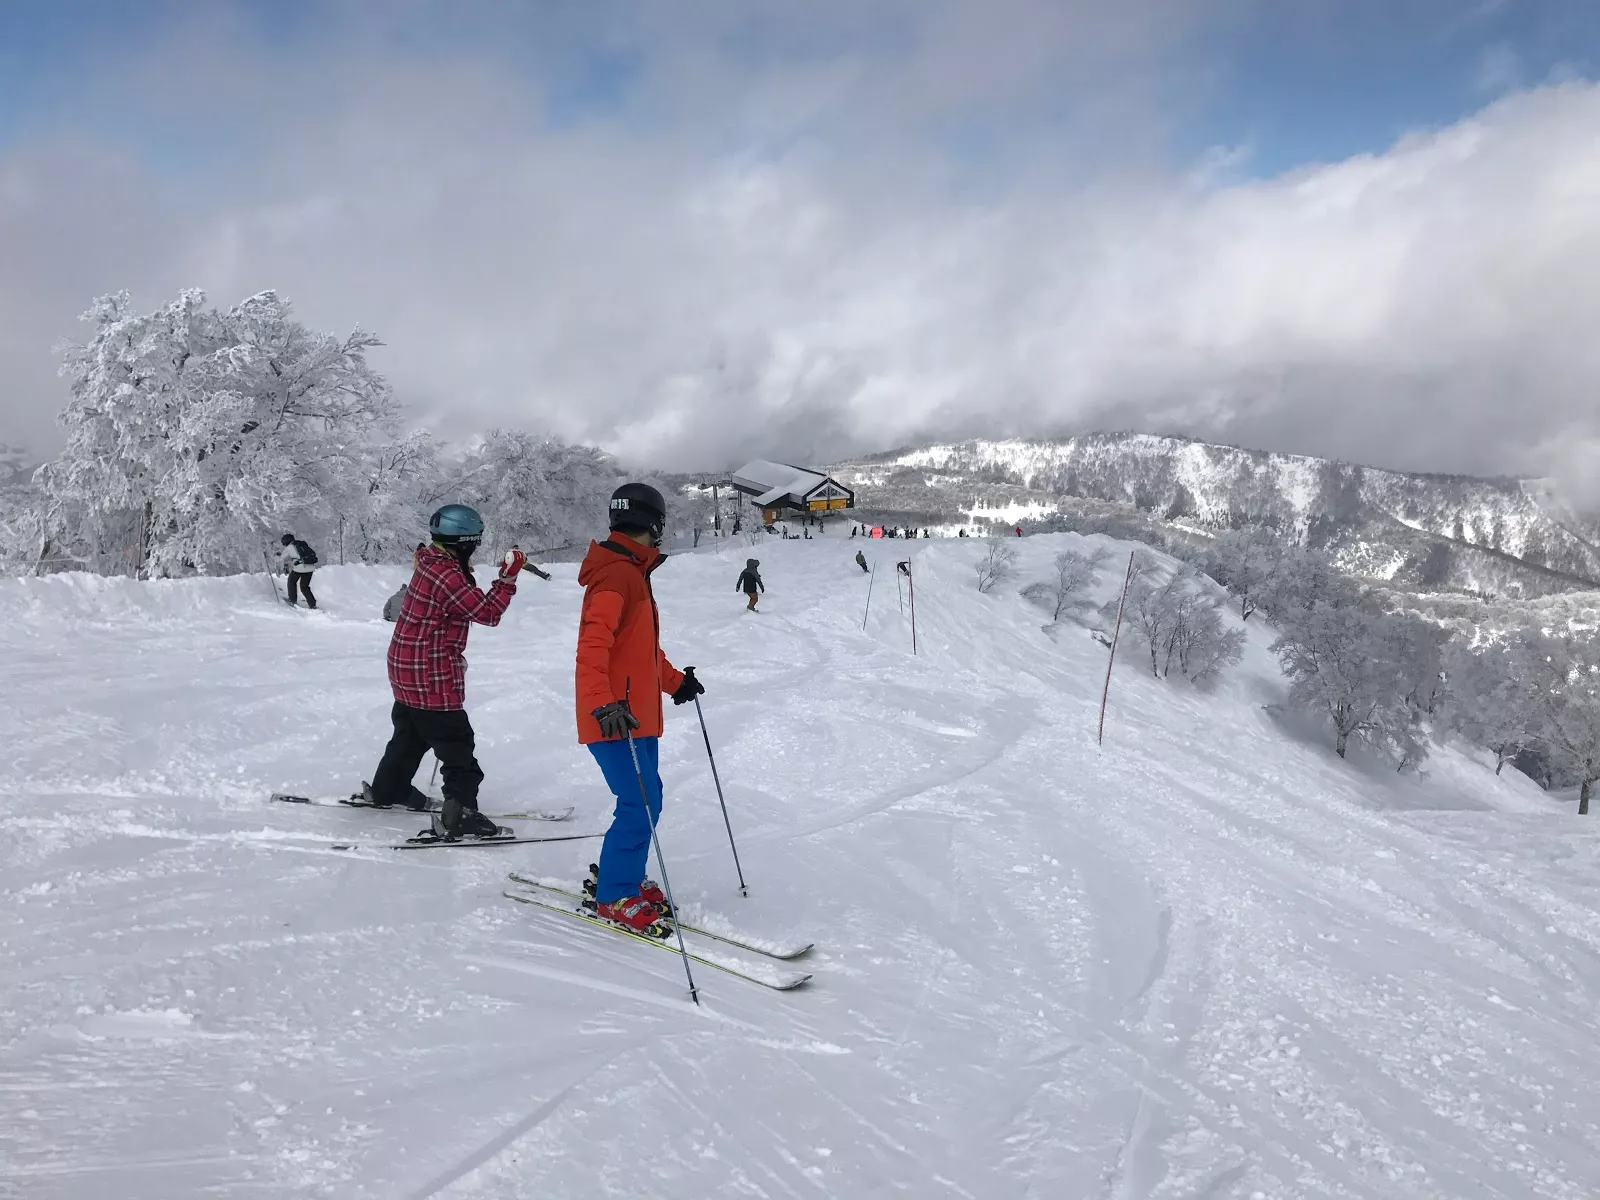 Nozawa Onsen Snow Resort in Japan, East Asia | Snowboarding,Skiing - Rated 4.5